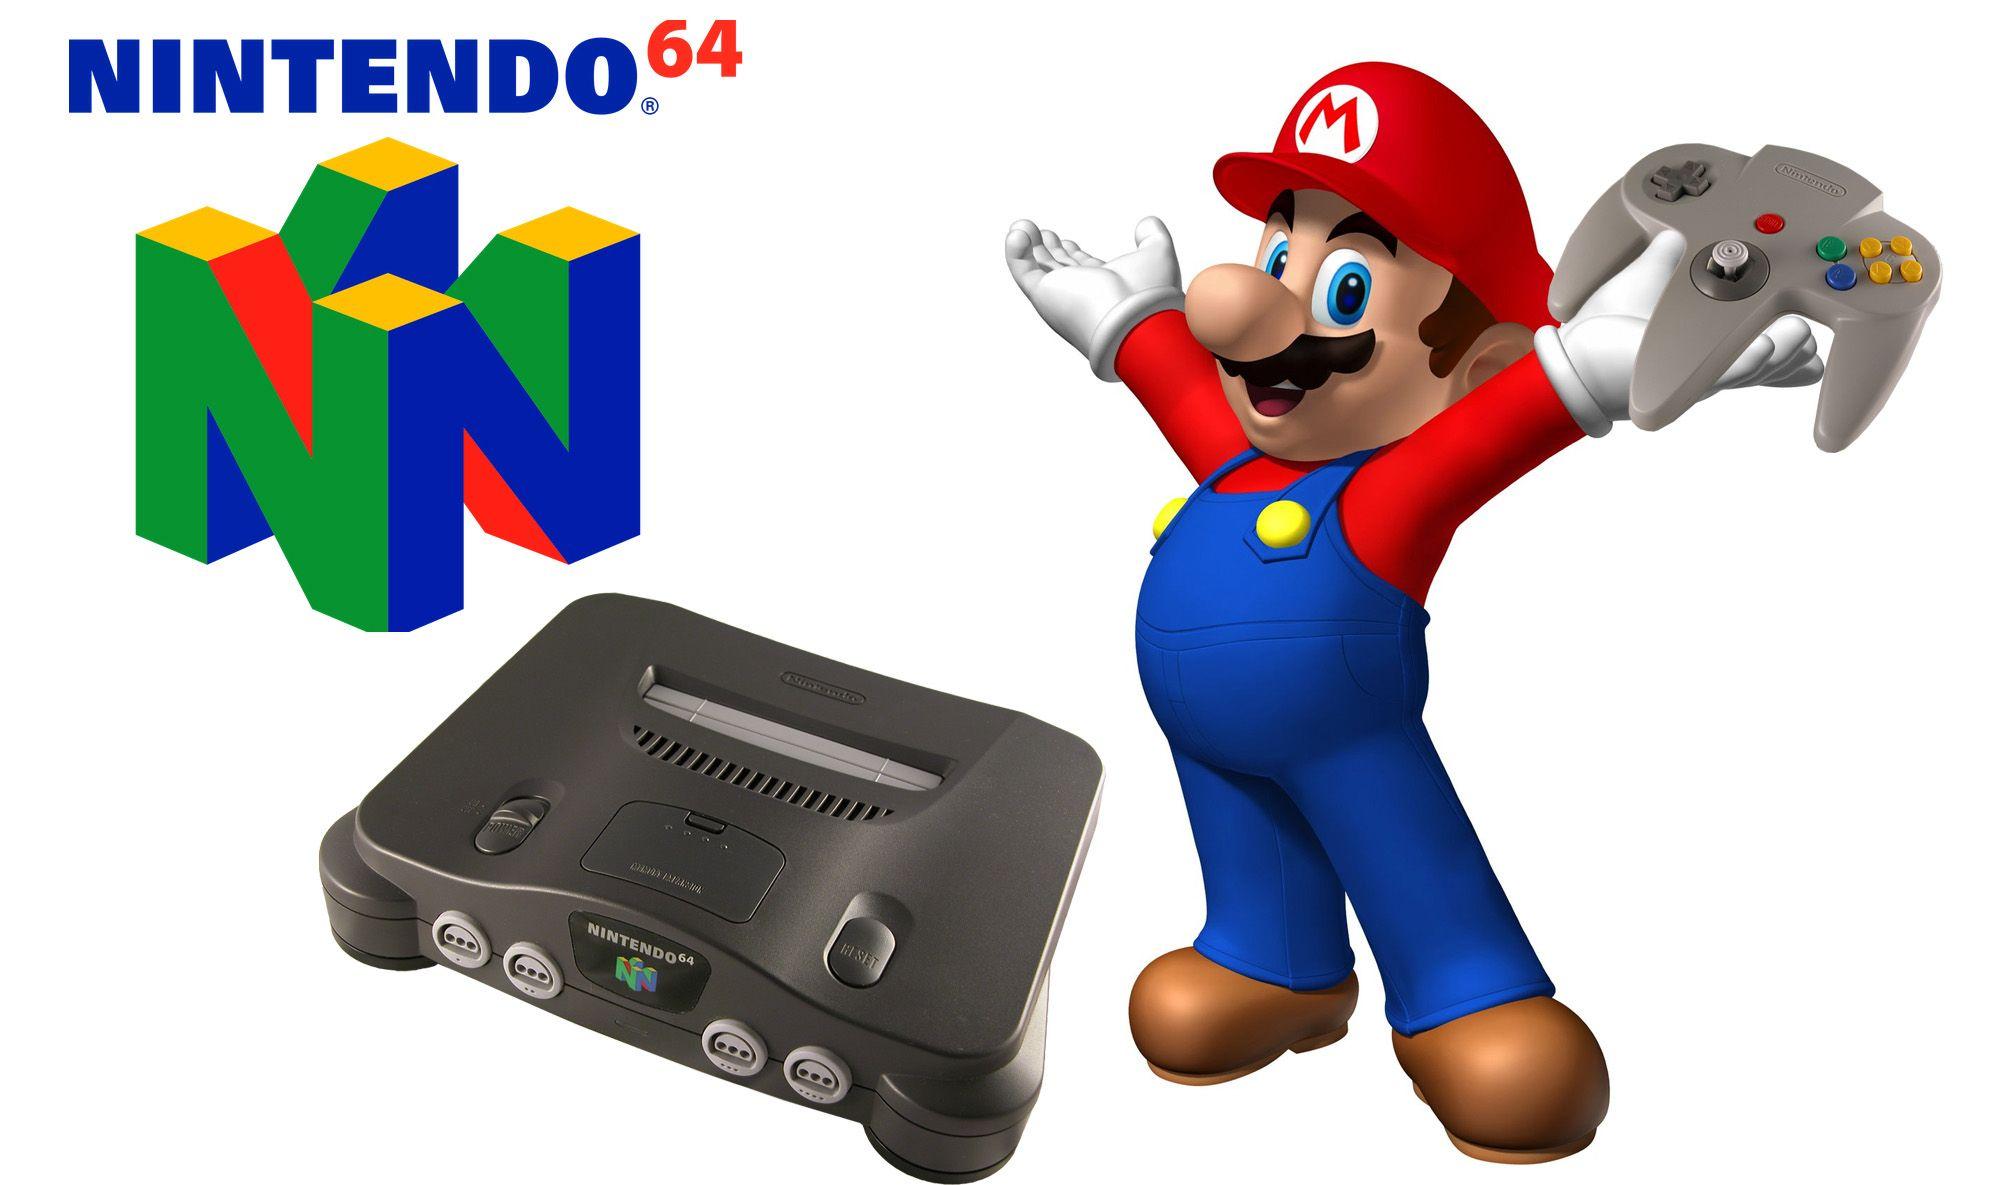 3920x2420px Nintendo 64 (2530.46 KB).09.2015